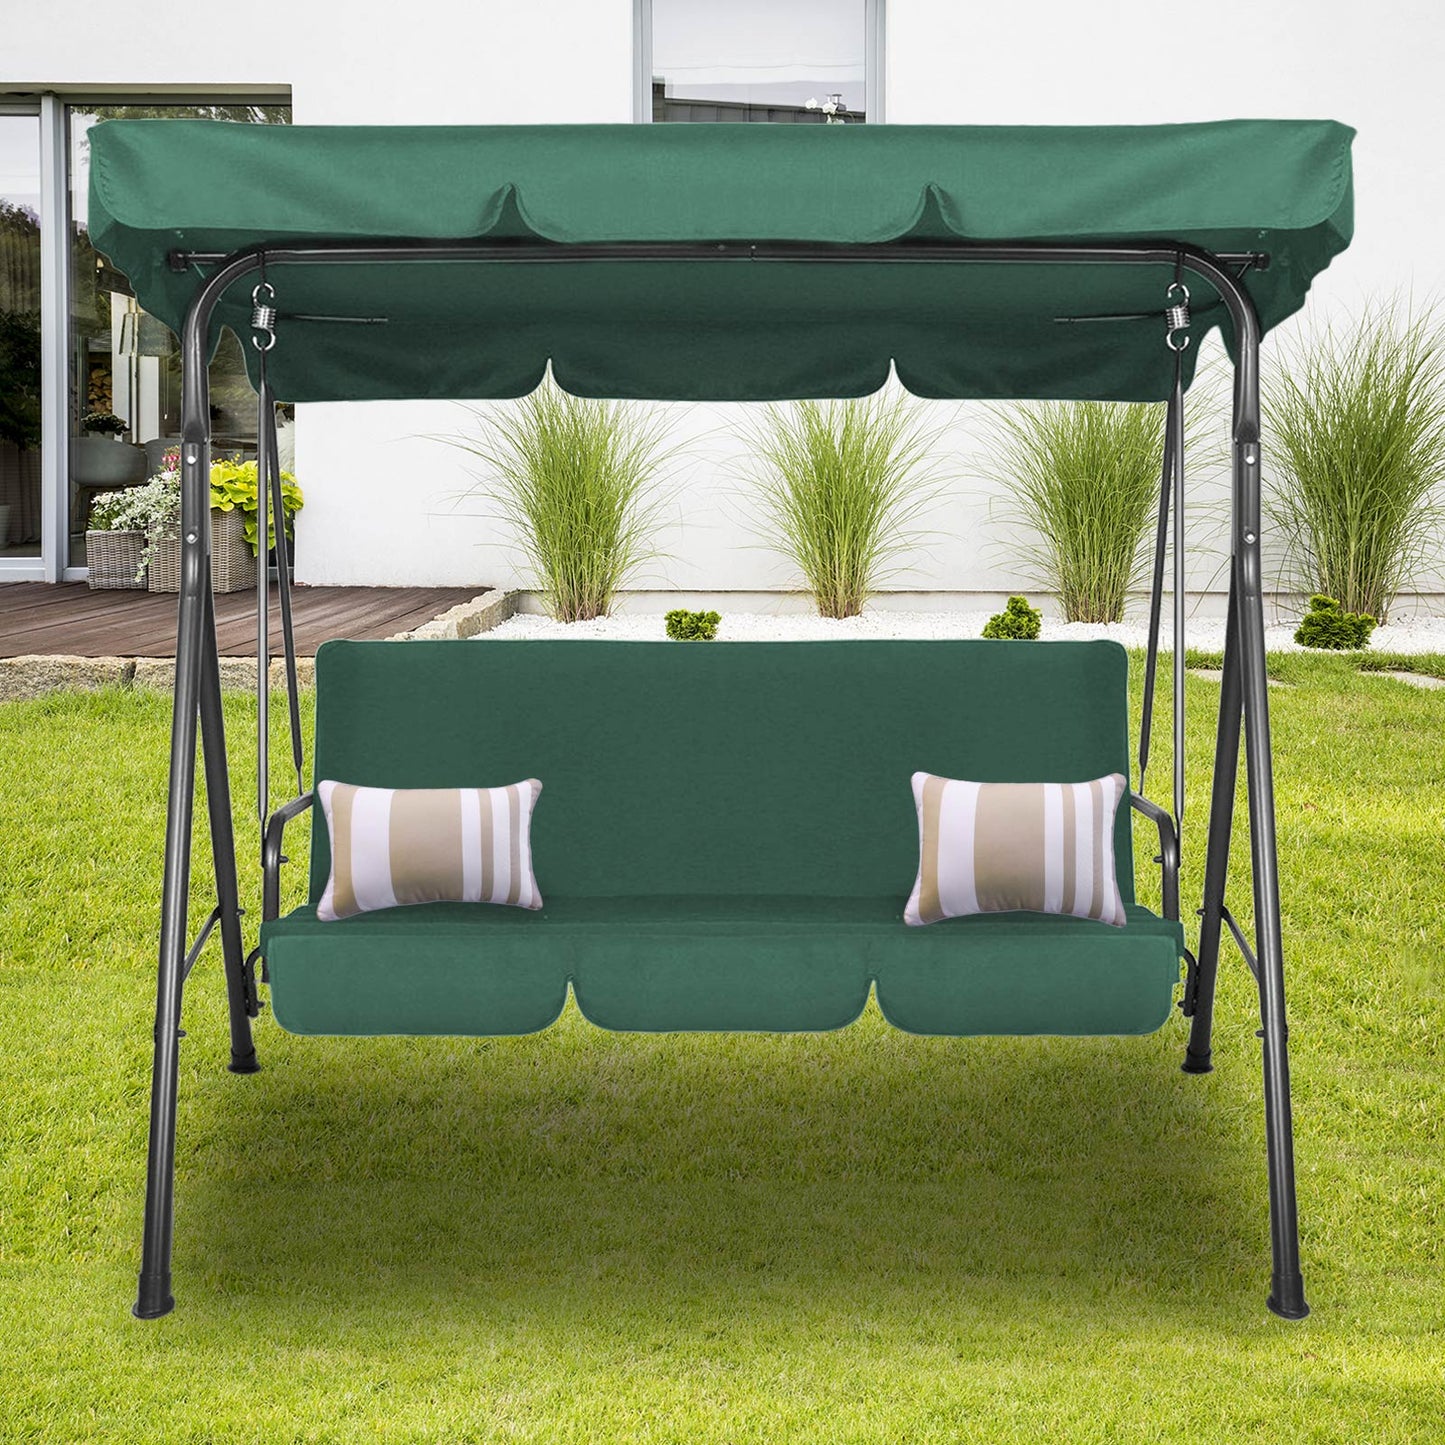 Colton Outdoor Swing Bench Seat Chair Canopy Furniture 3 Seater Garden Hammock - Dark Green